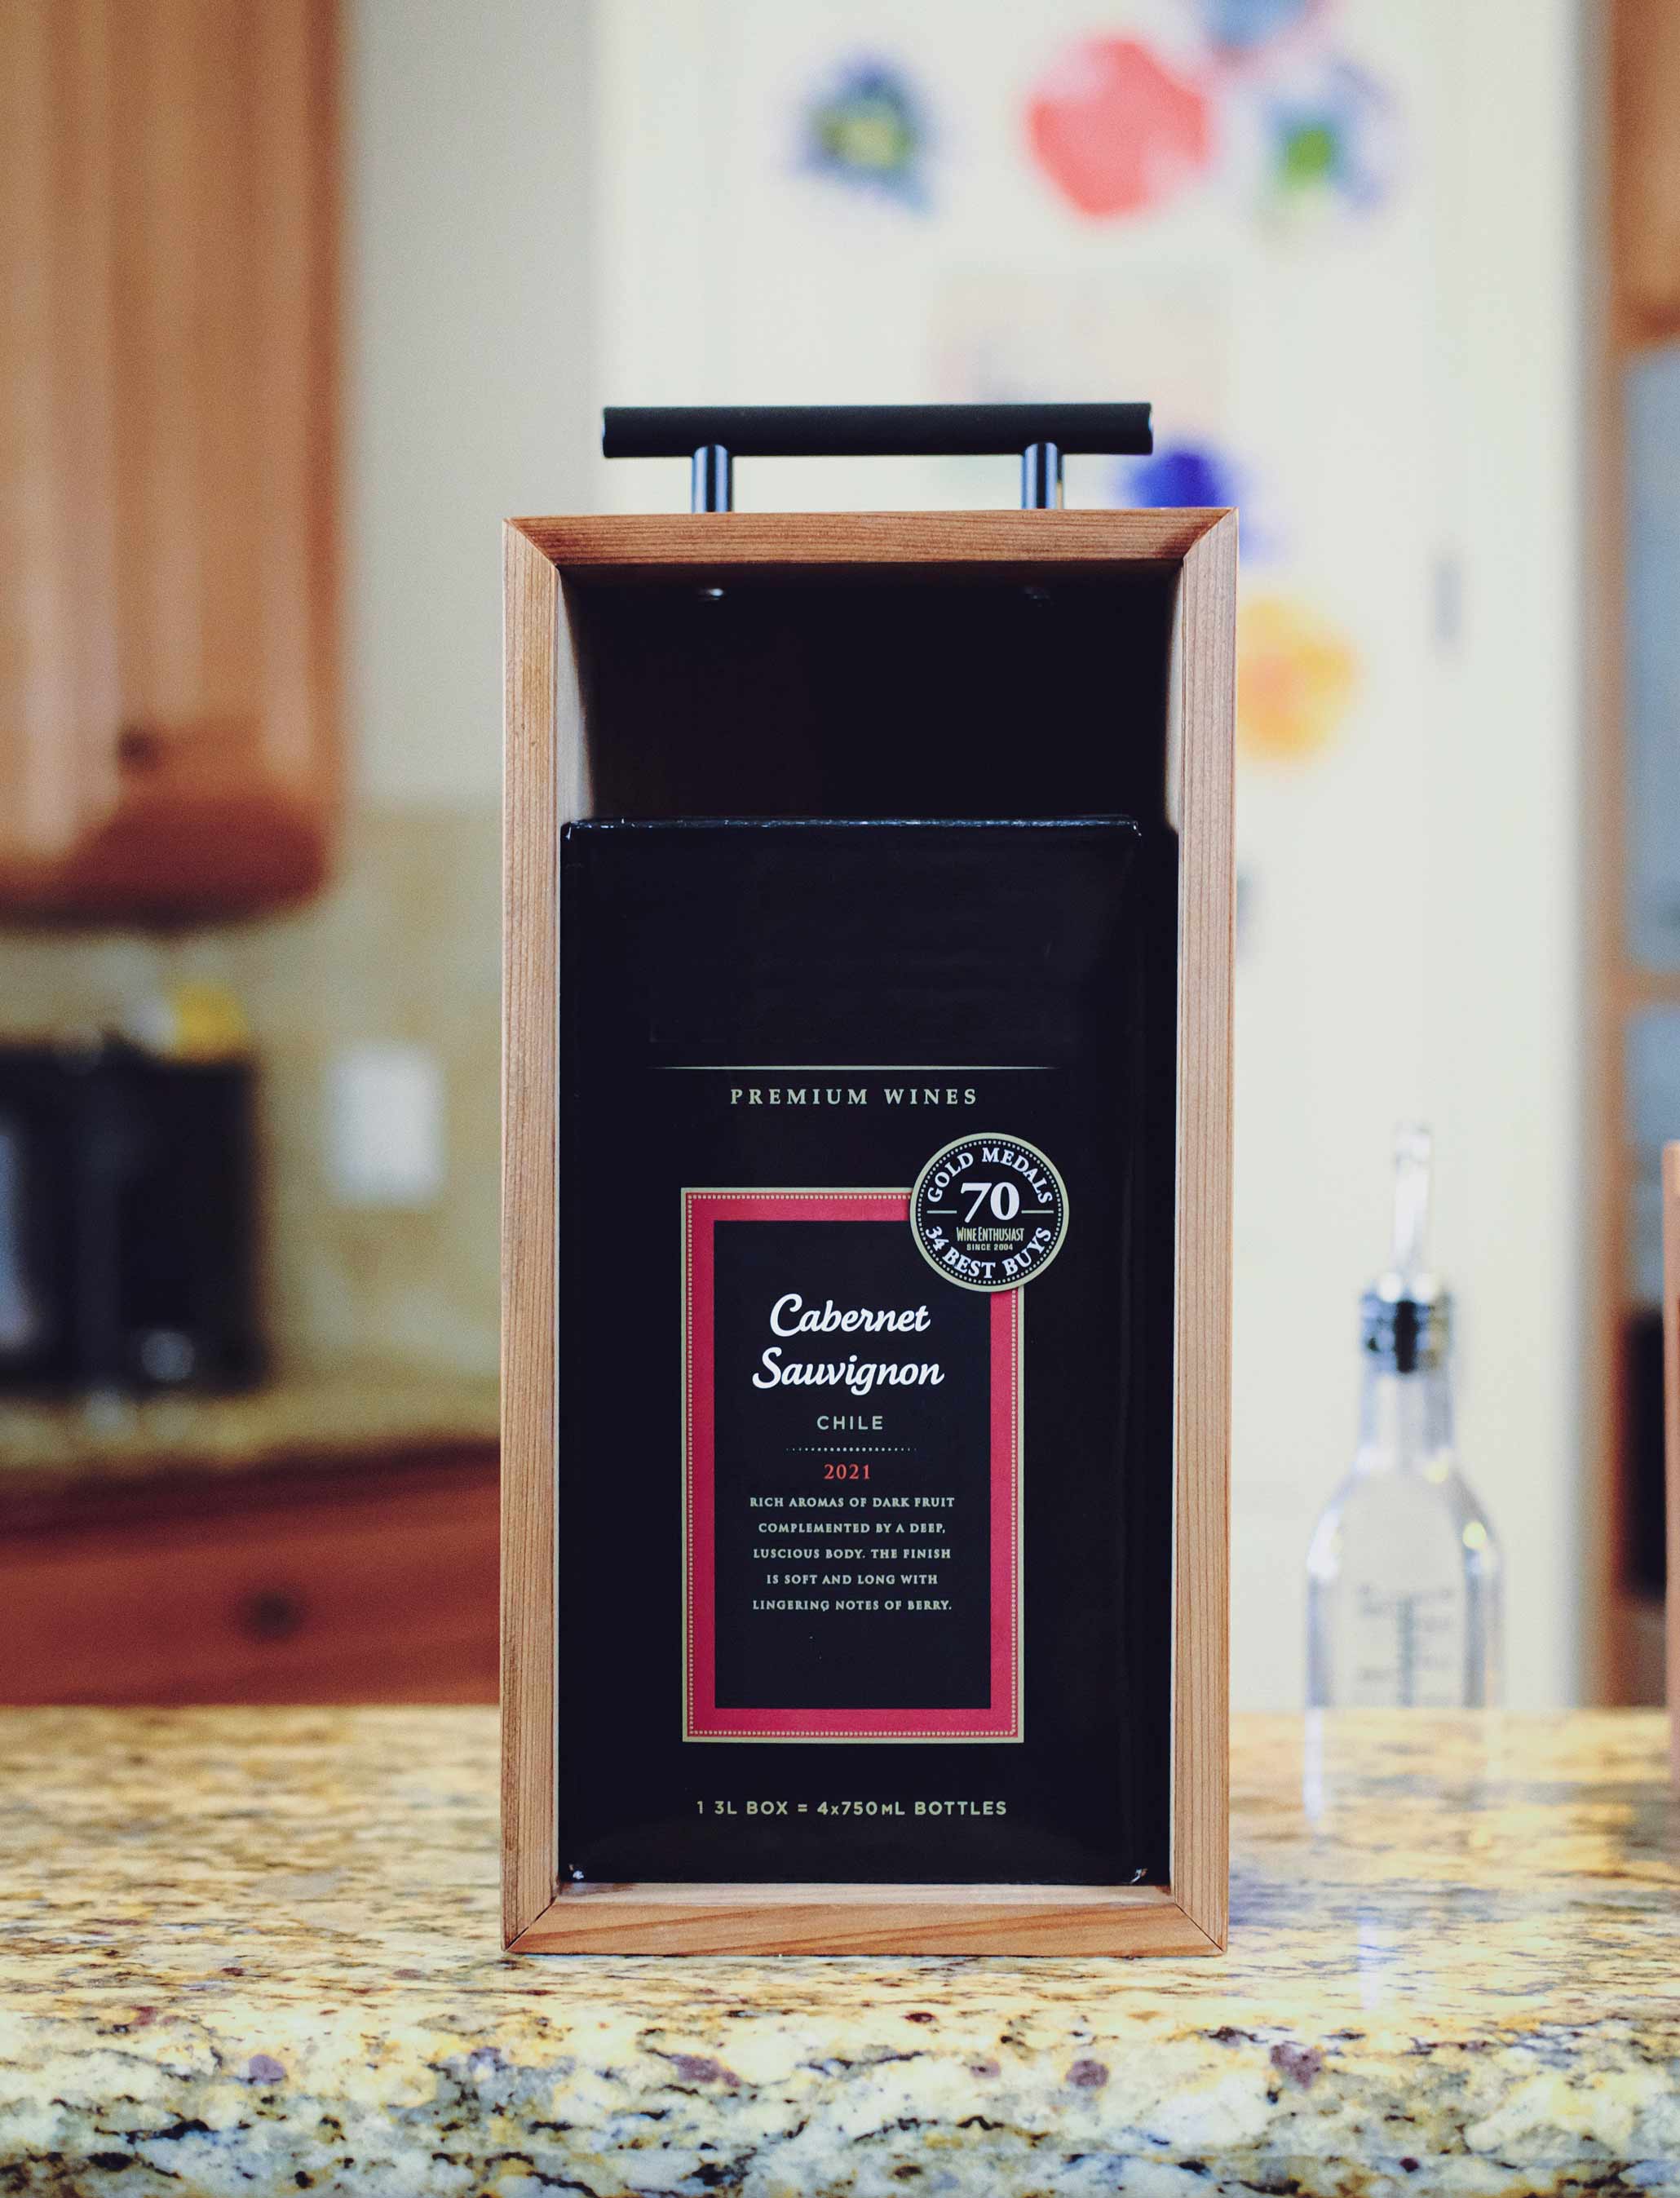 Weekend walls beverage dispenser with black box 3l wine box inside